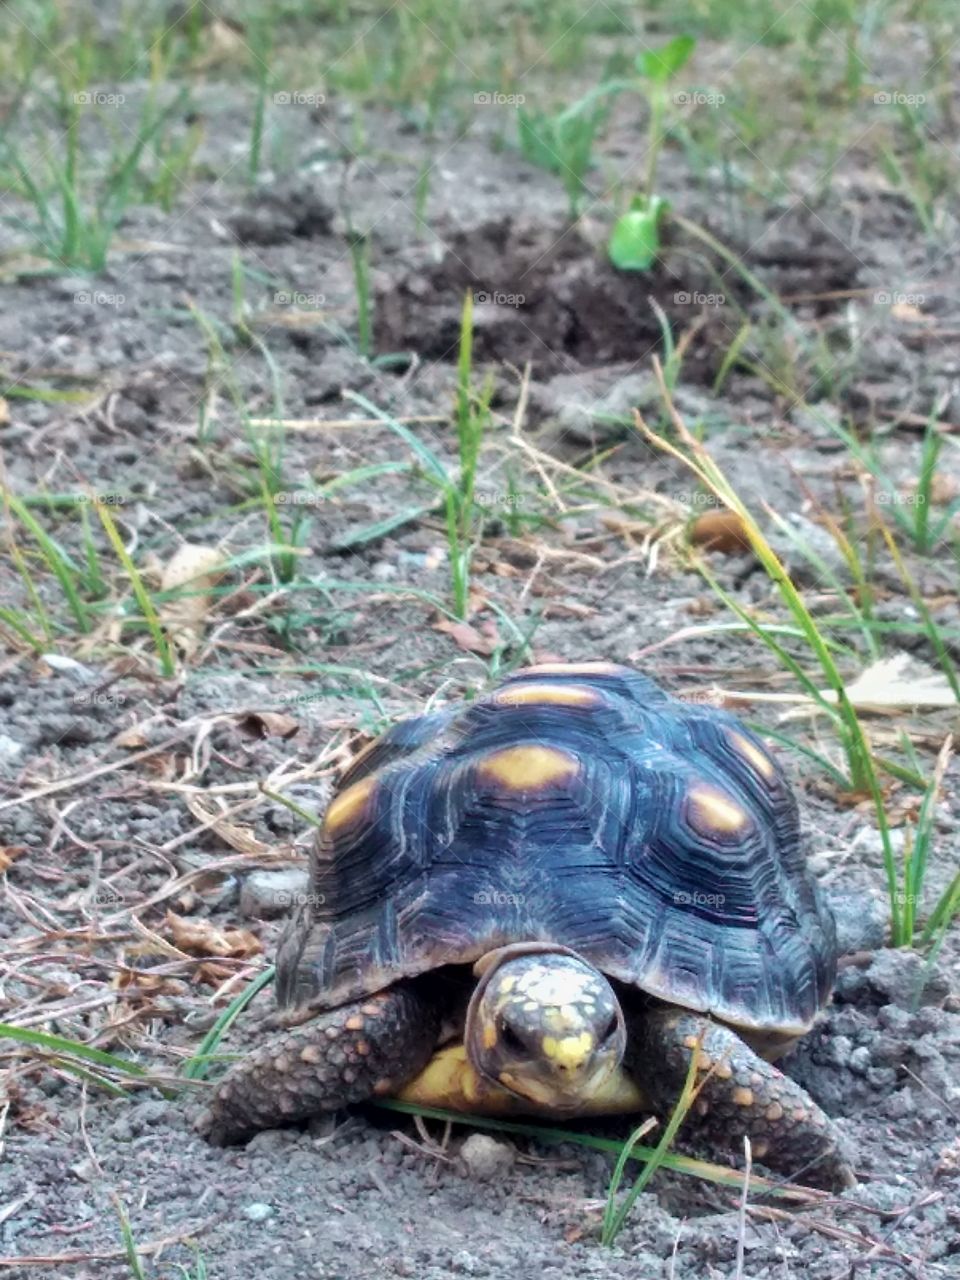 A little turtle in the garden